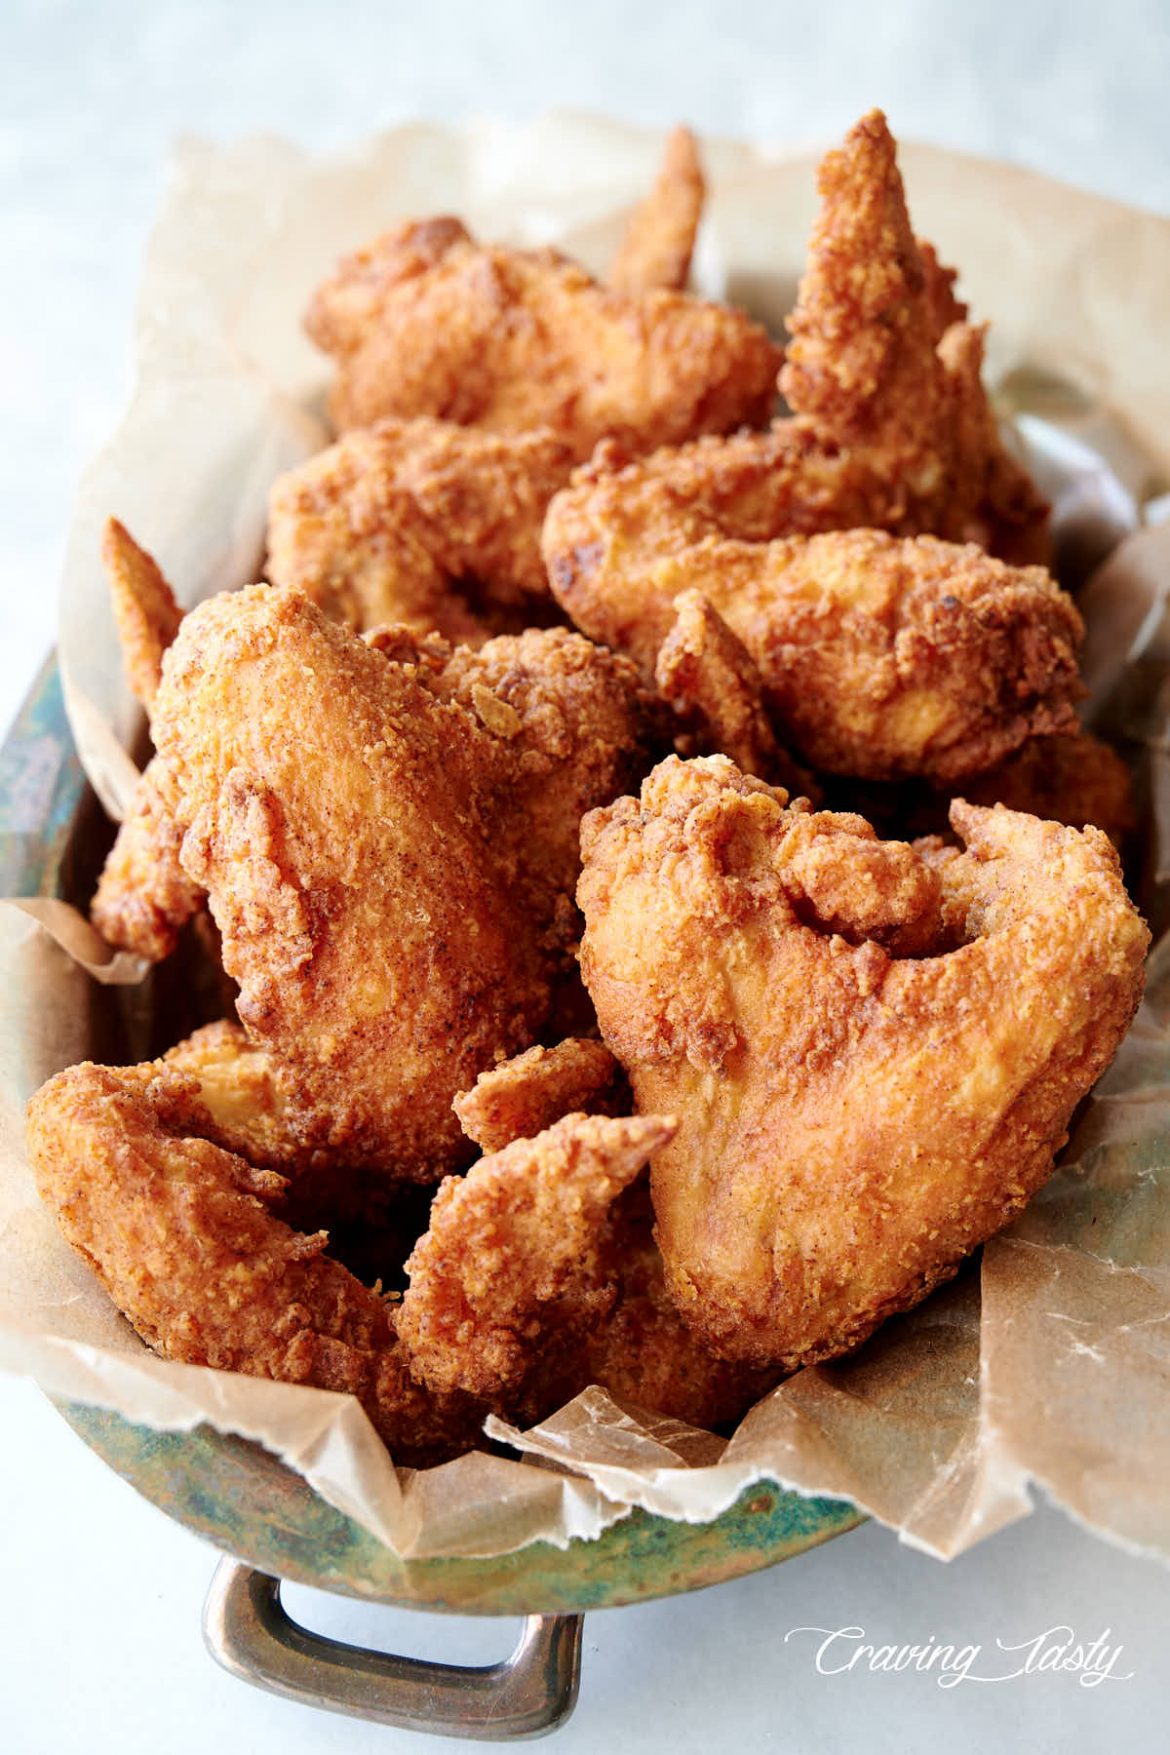 Deep-Fried Chicken Wings - Craving Tasty